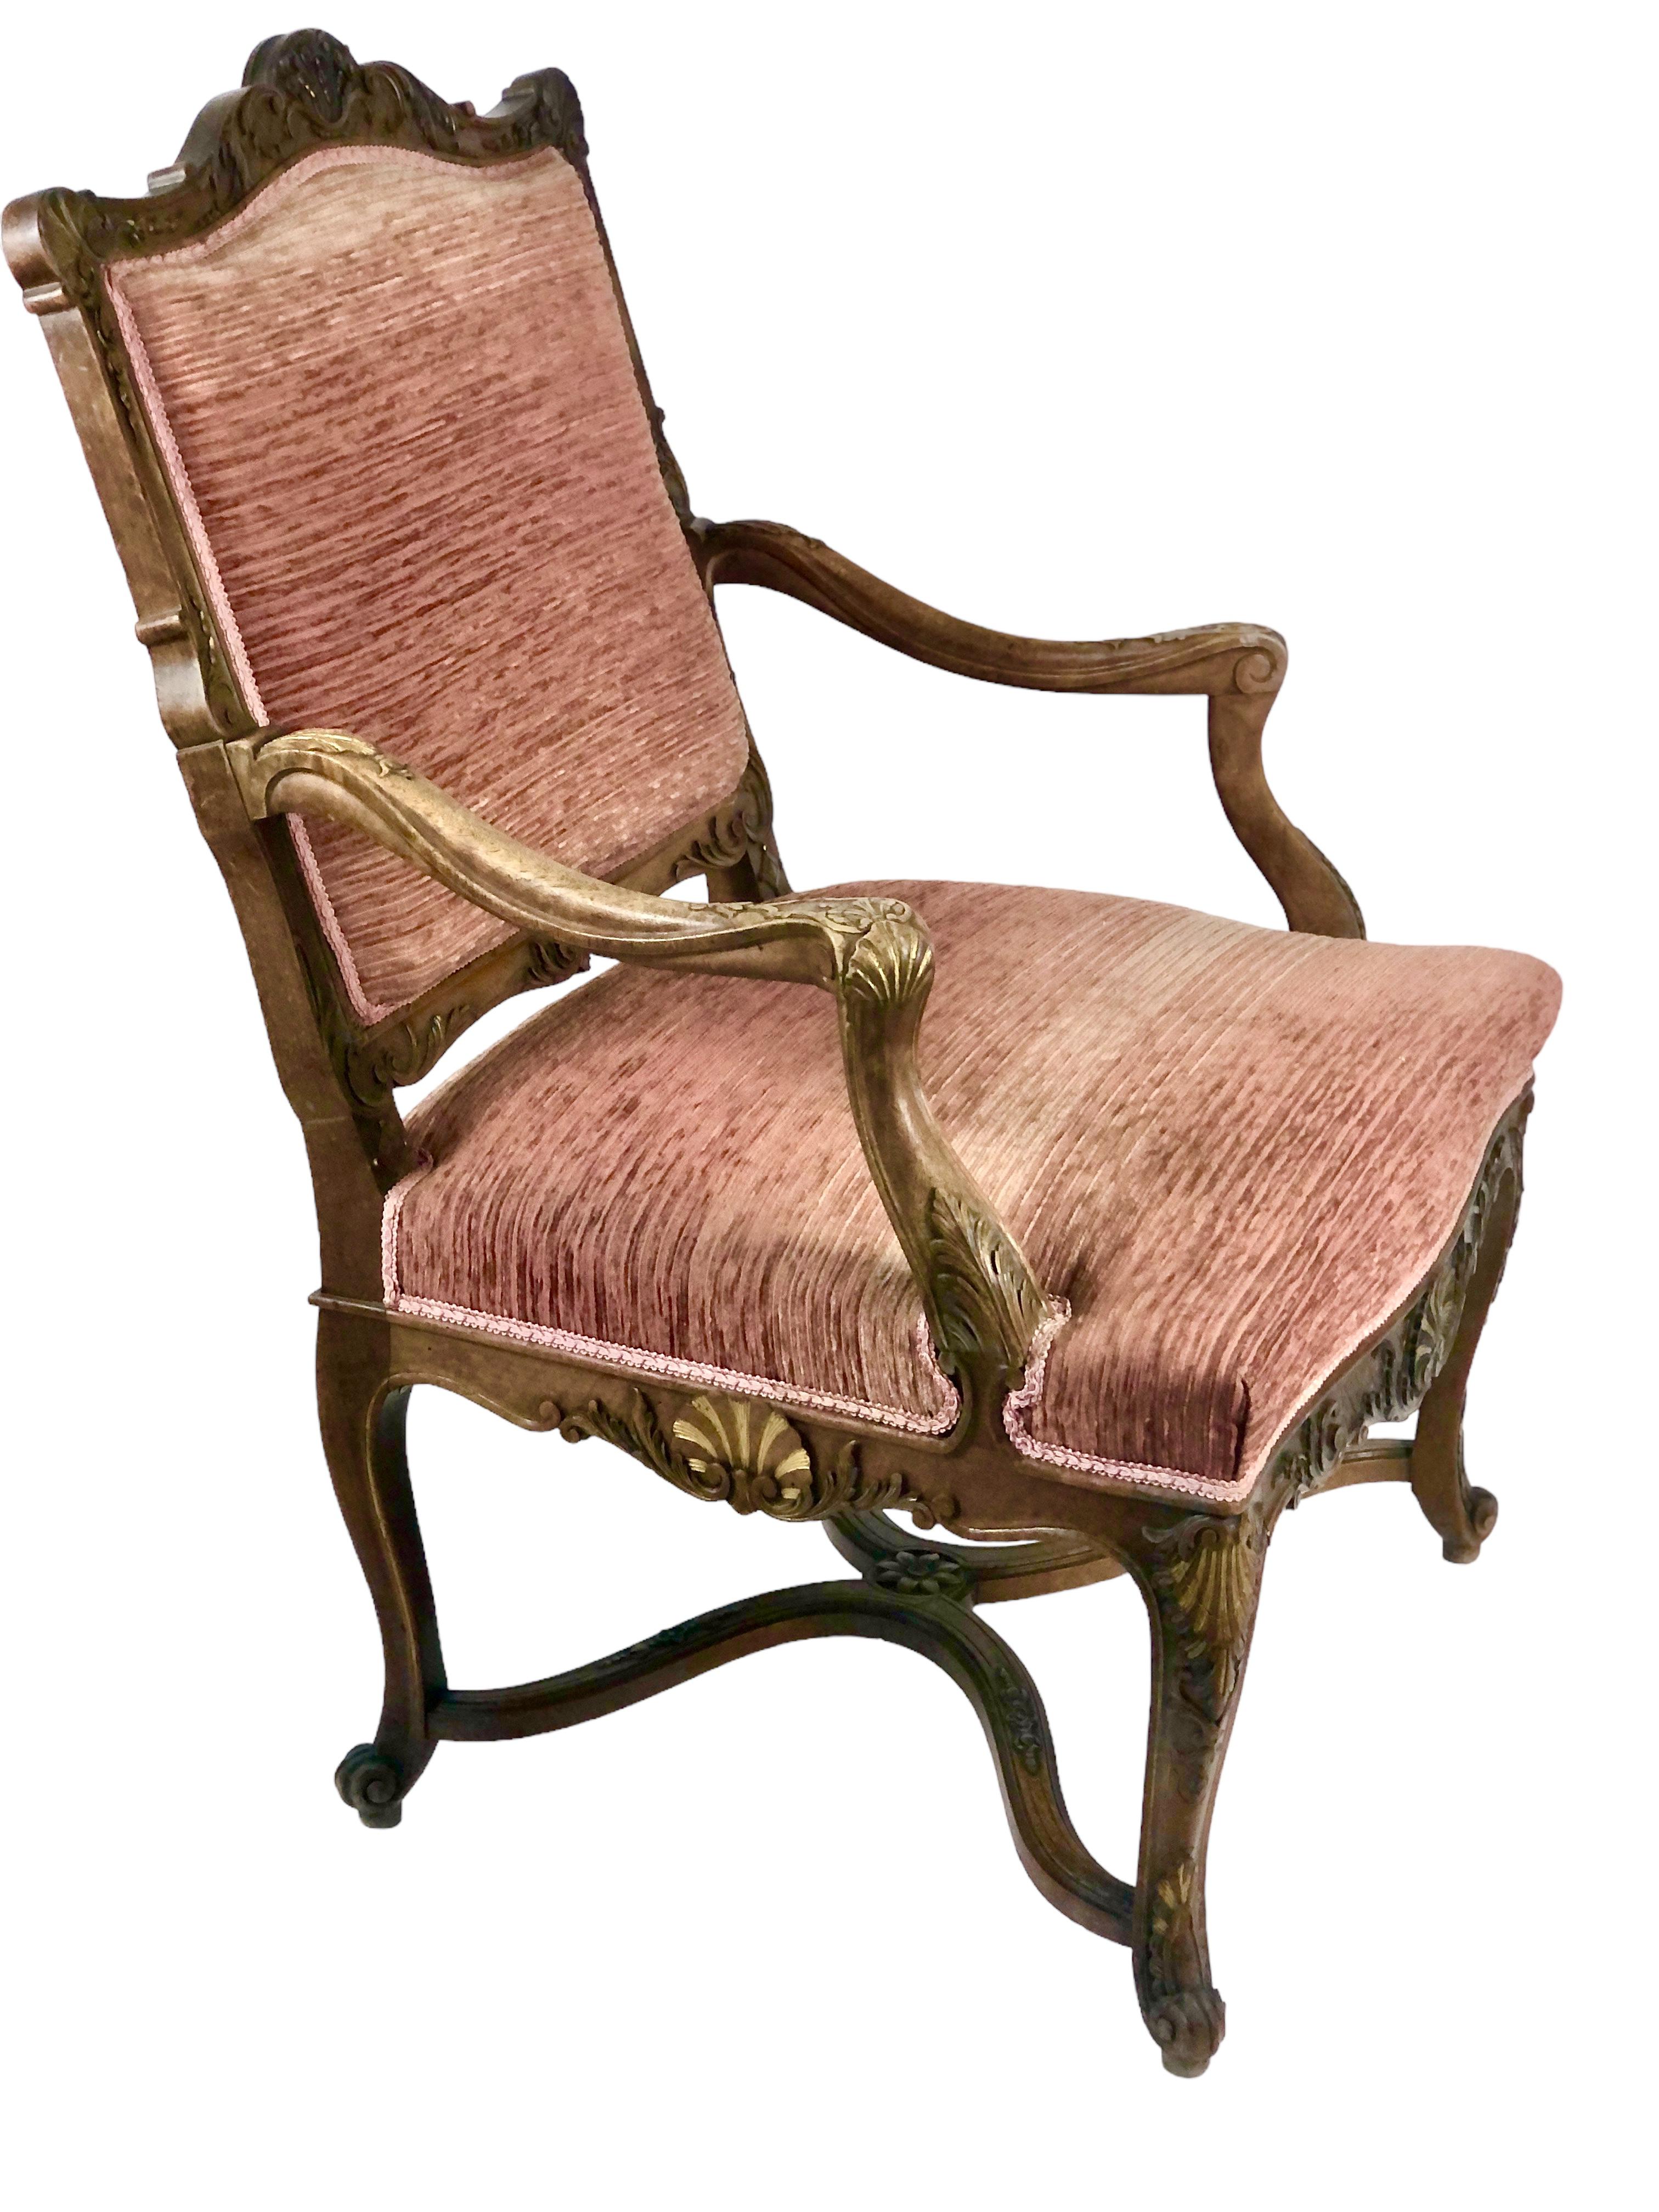 19th Century Pair of Walnut Regency Chairs Called “Fauteuils à La Reine” For Sale 4